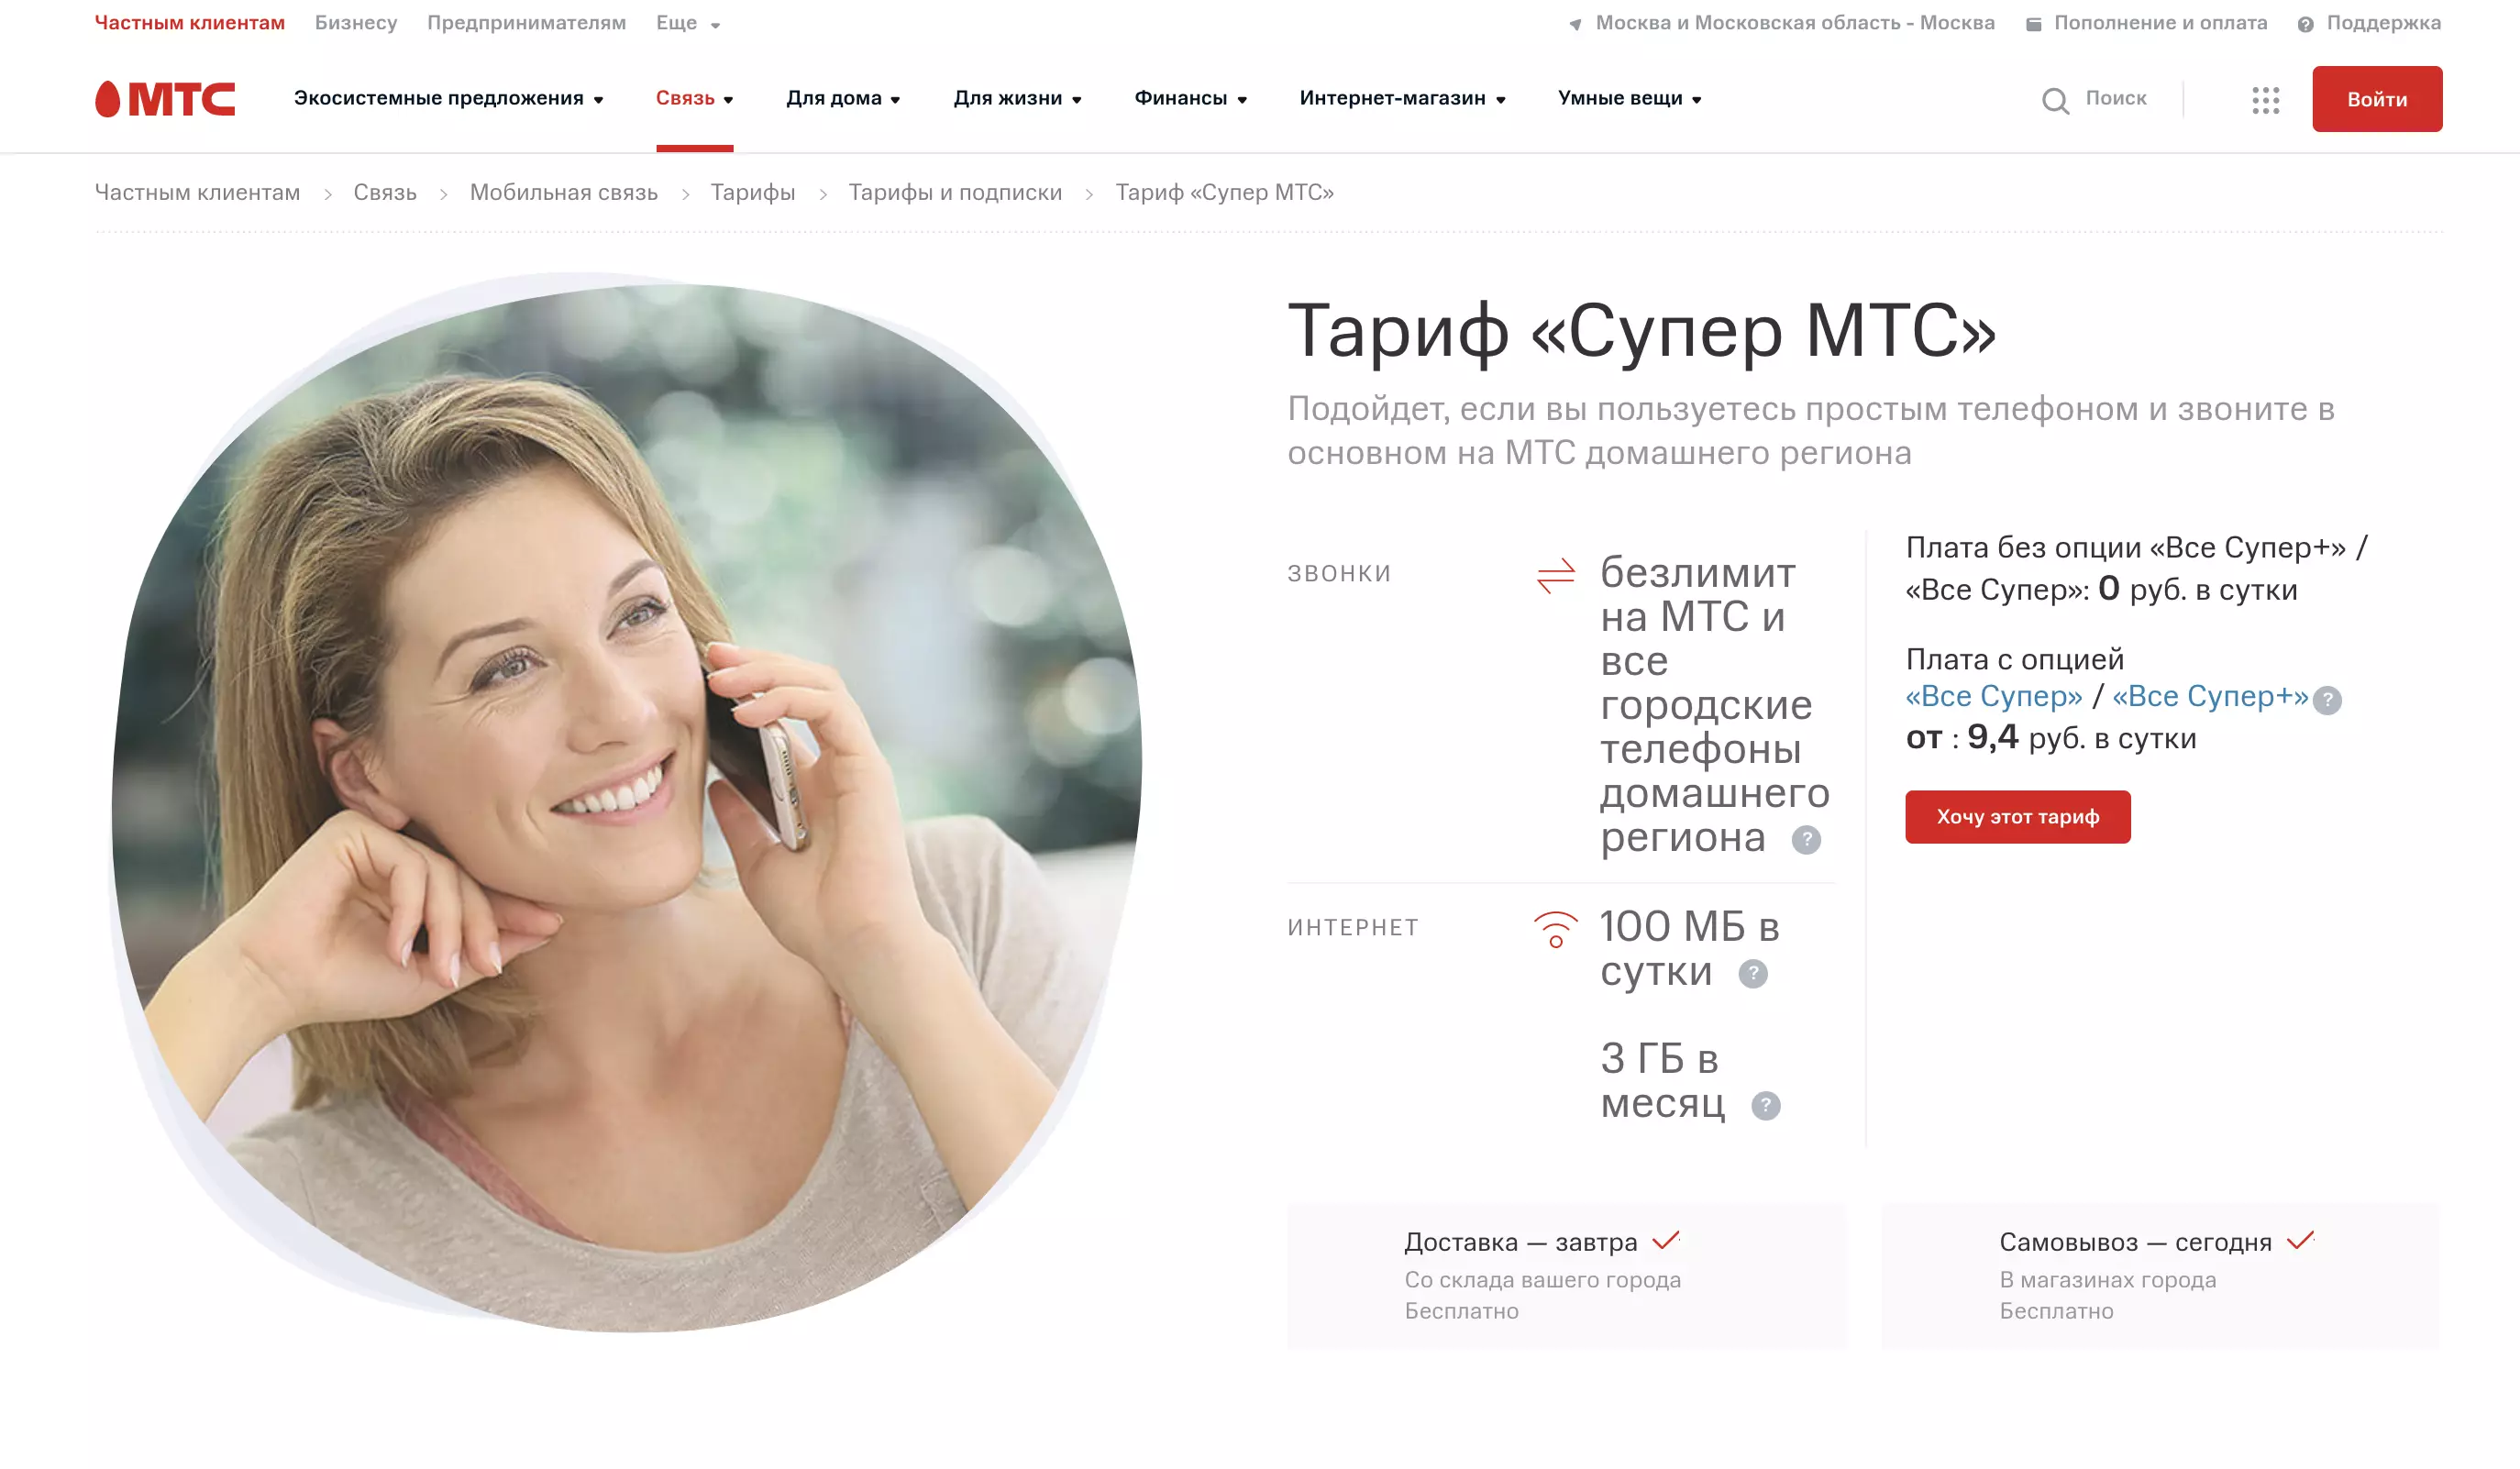 тарифы мтс для телефона без интернета - Тариф Супер МТС